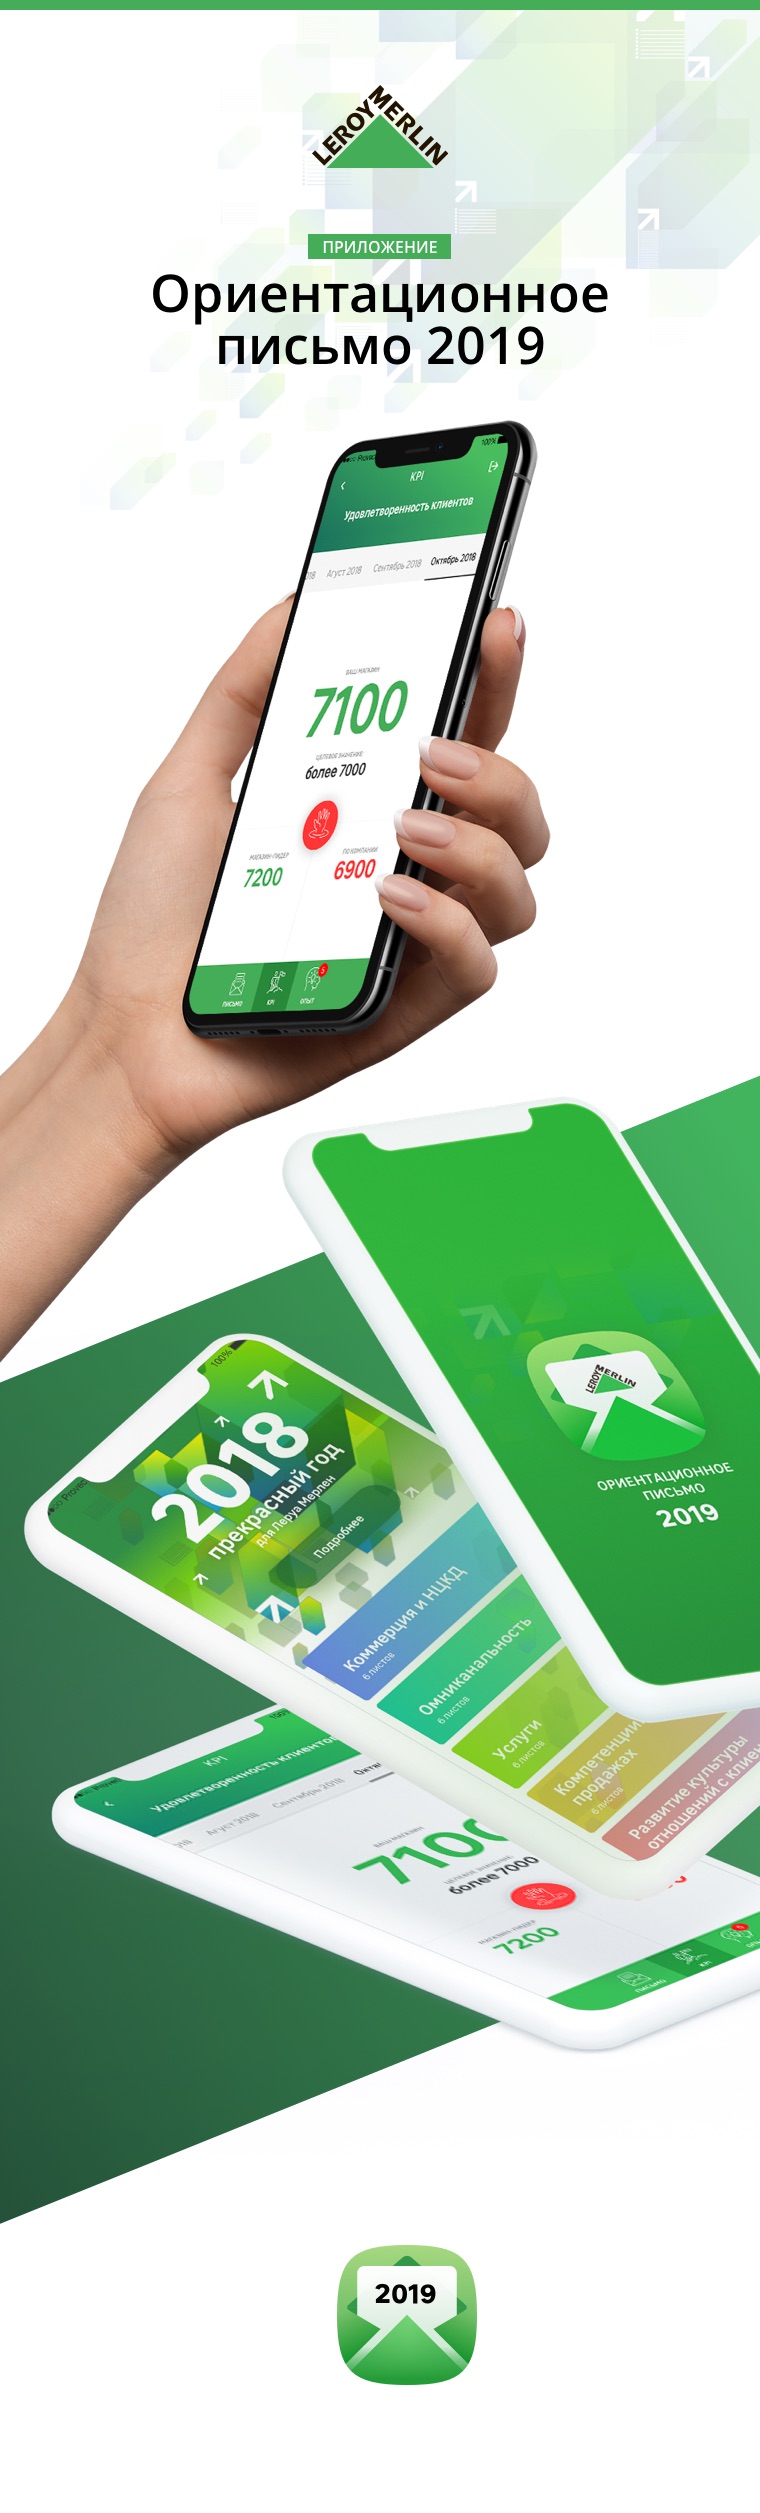 Эскиз проекта "Goals 2019" - mobile application